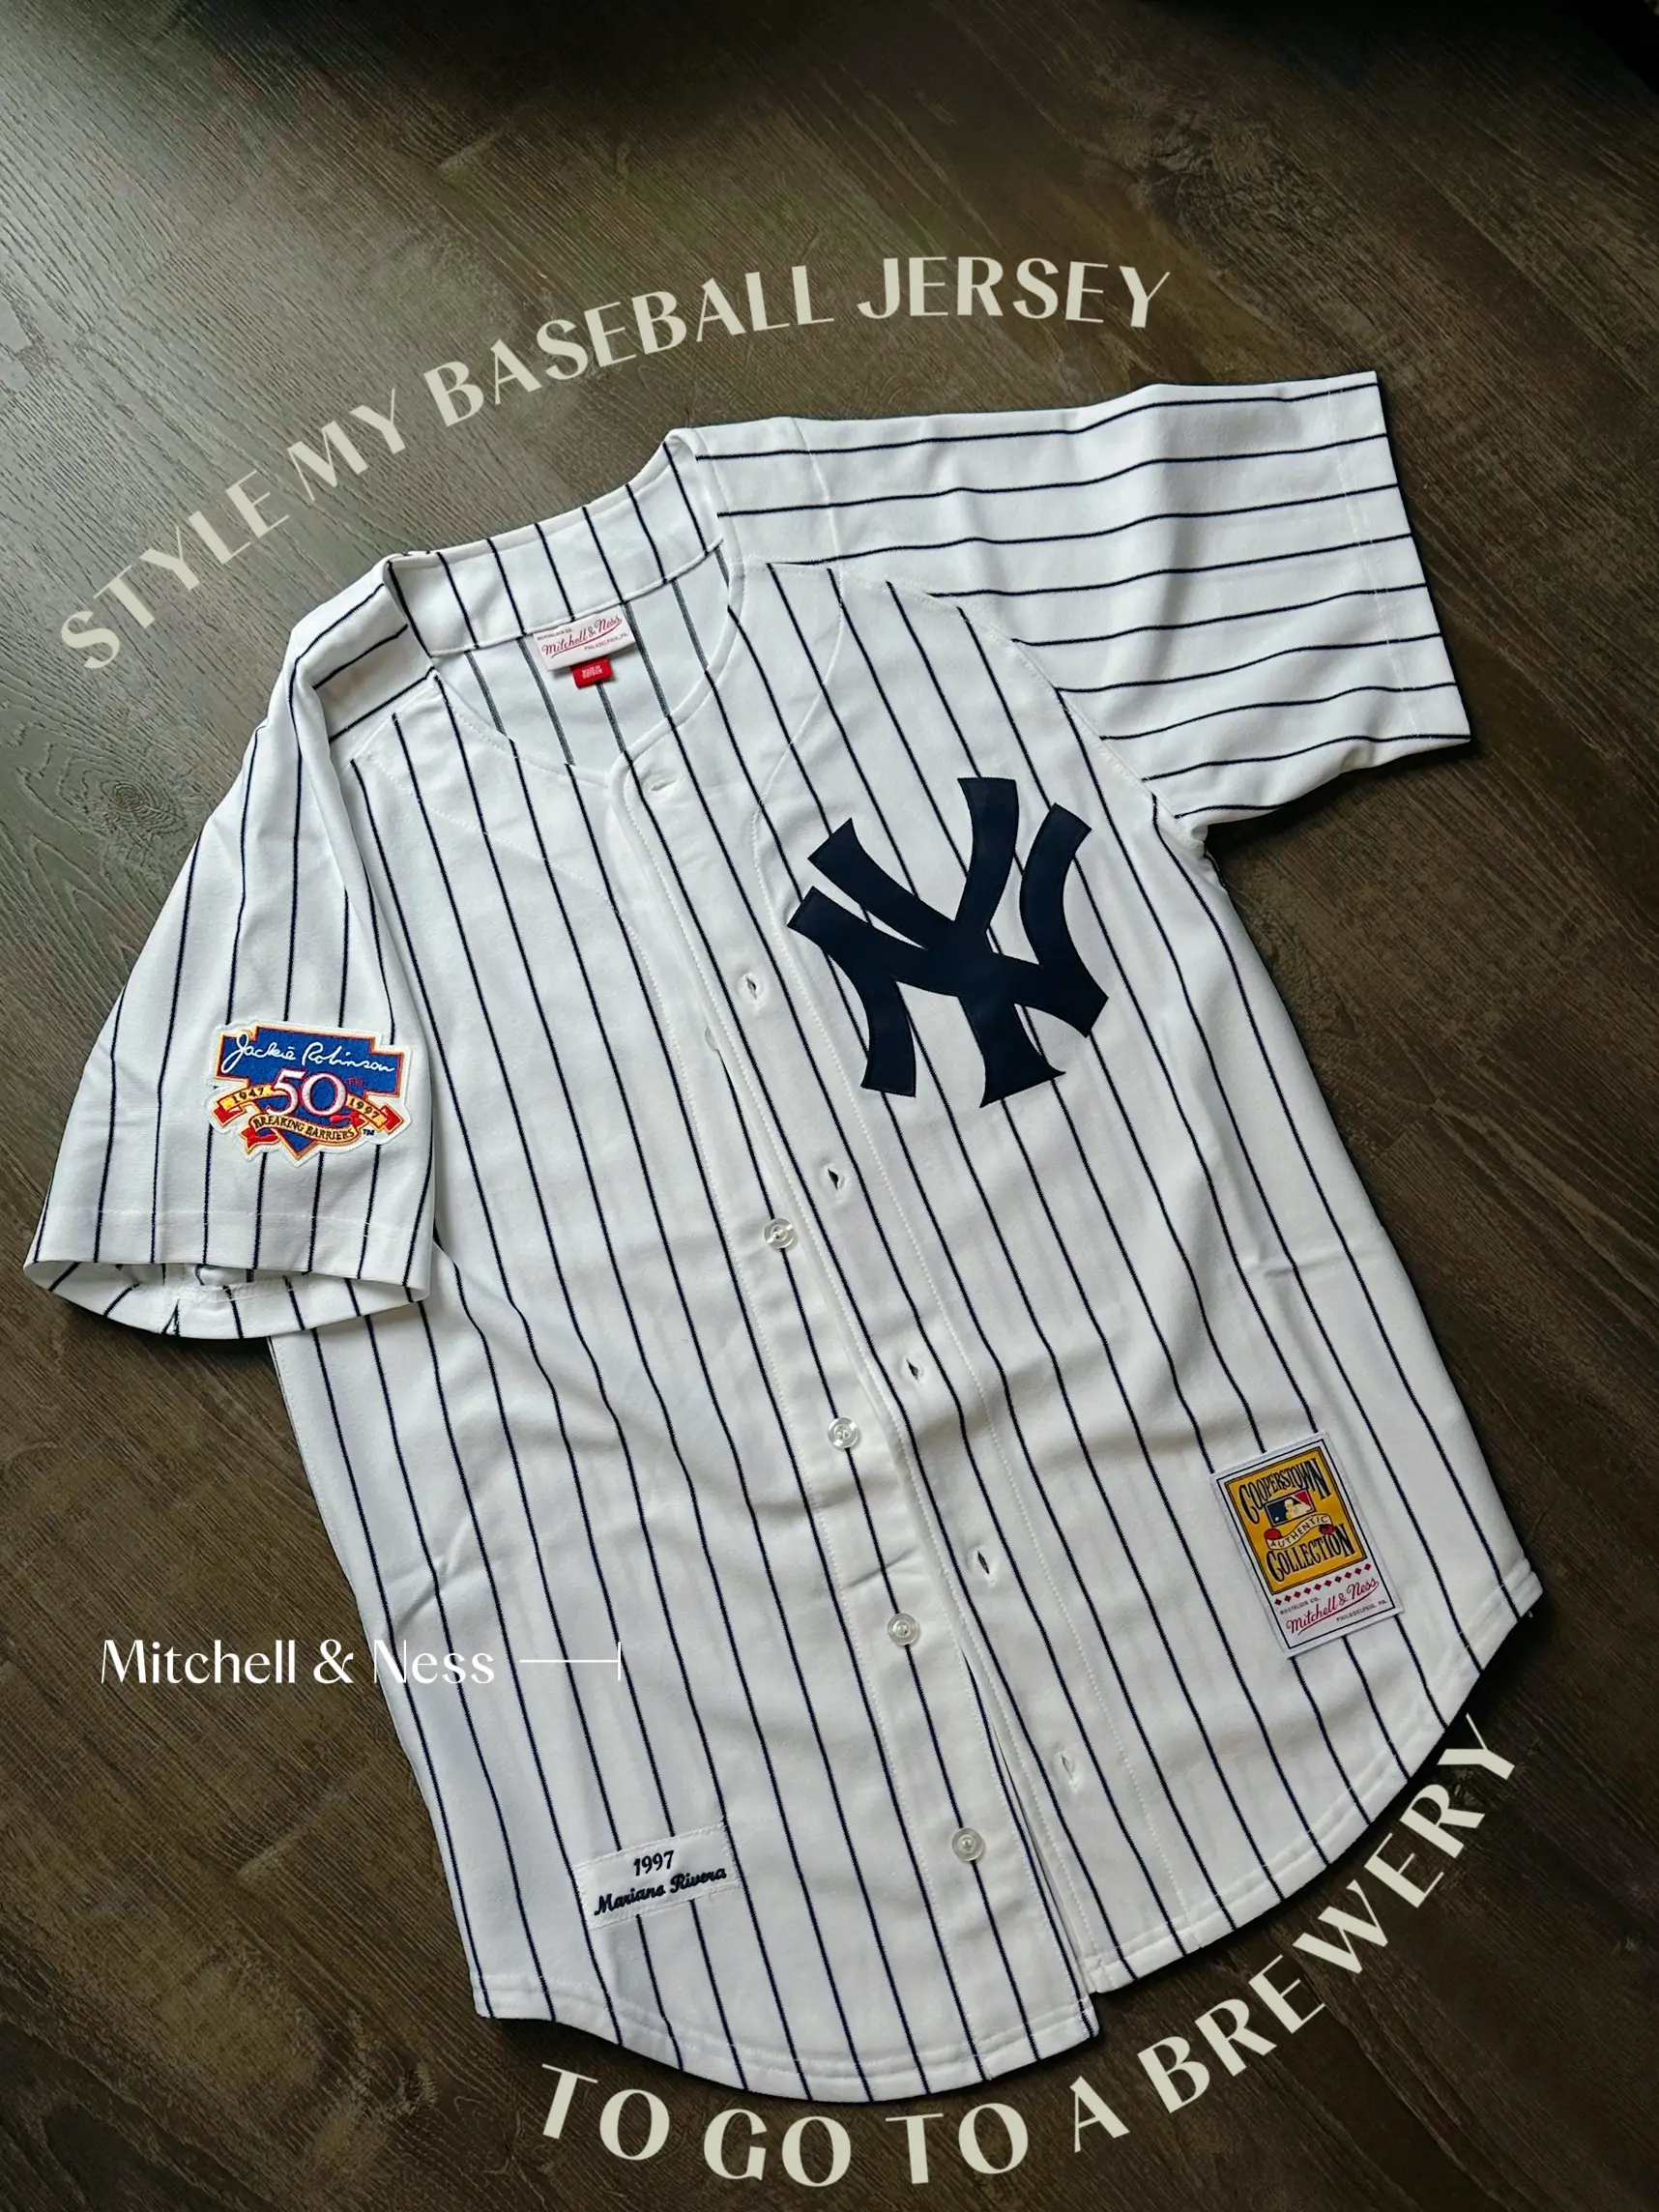 Vintage Inspired Baseball Knits Inspiration - NY Giants sweater at